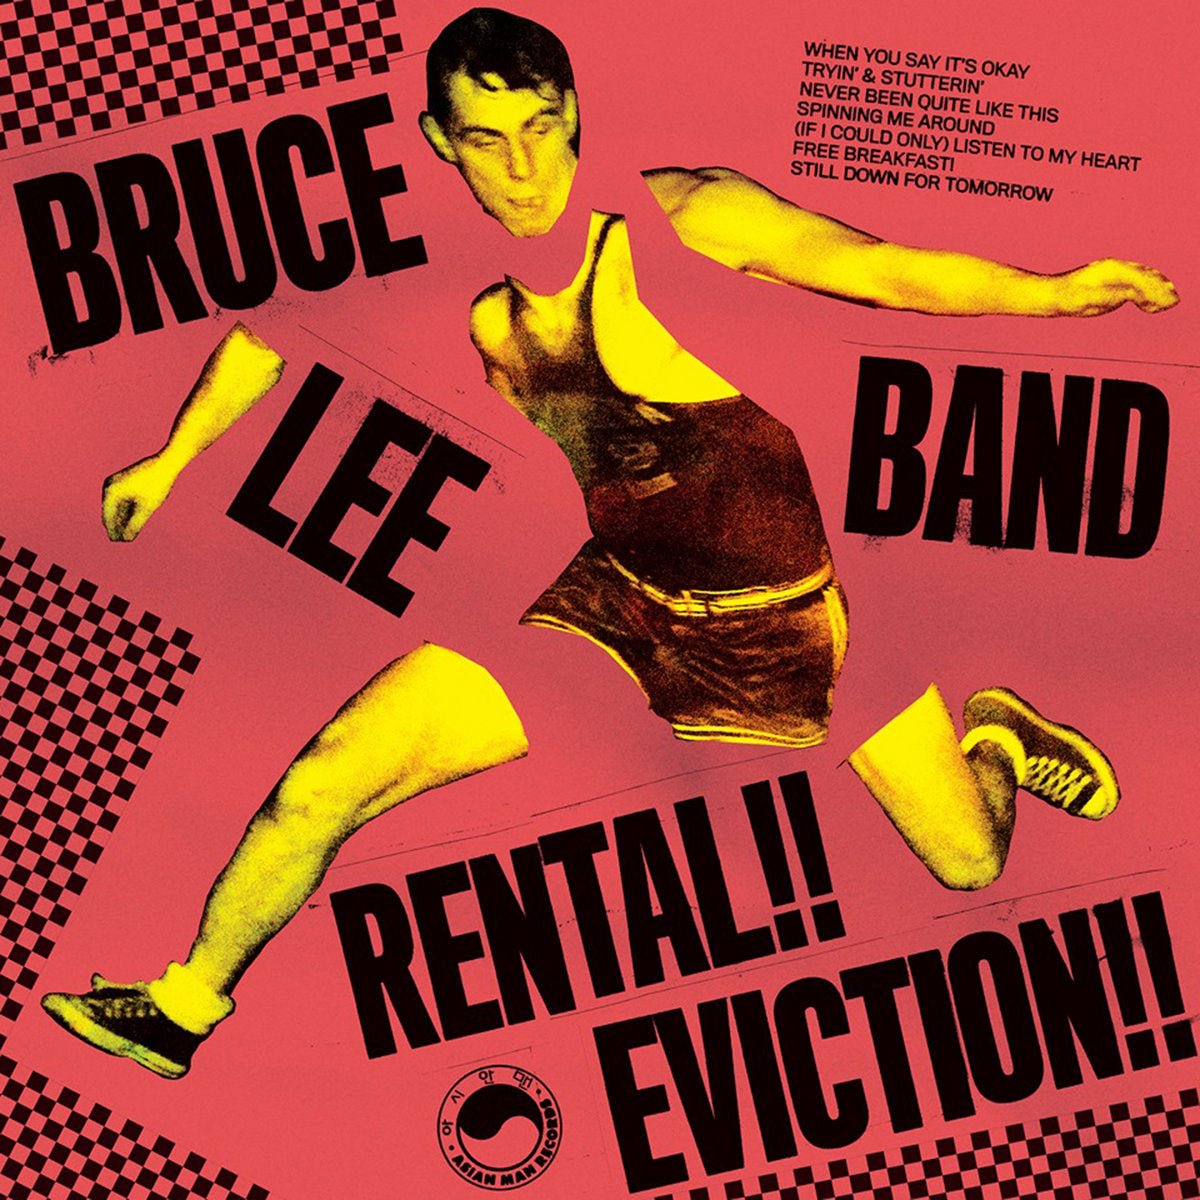 Bruce Lee Band - Rental!! Eviction!! LP - Vinyl - Asian Man